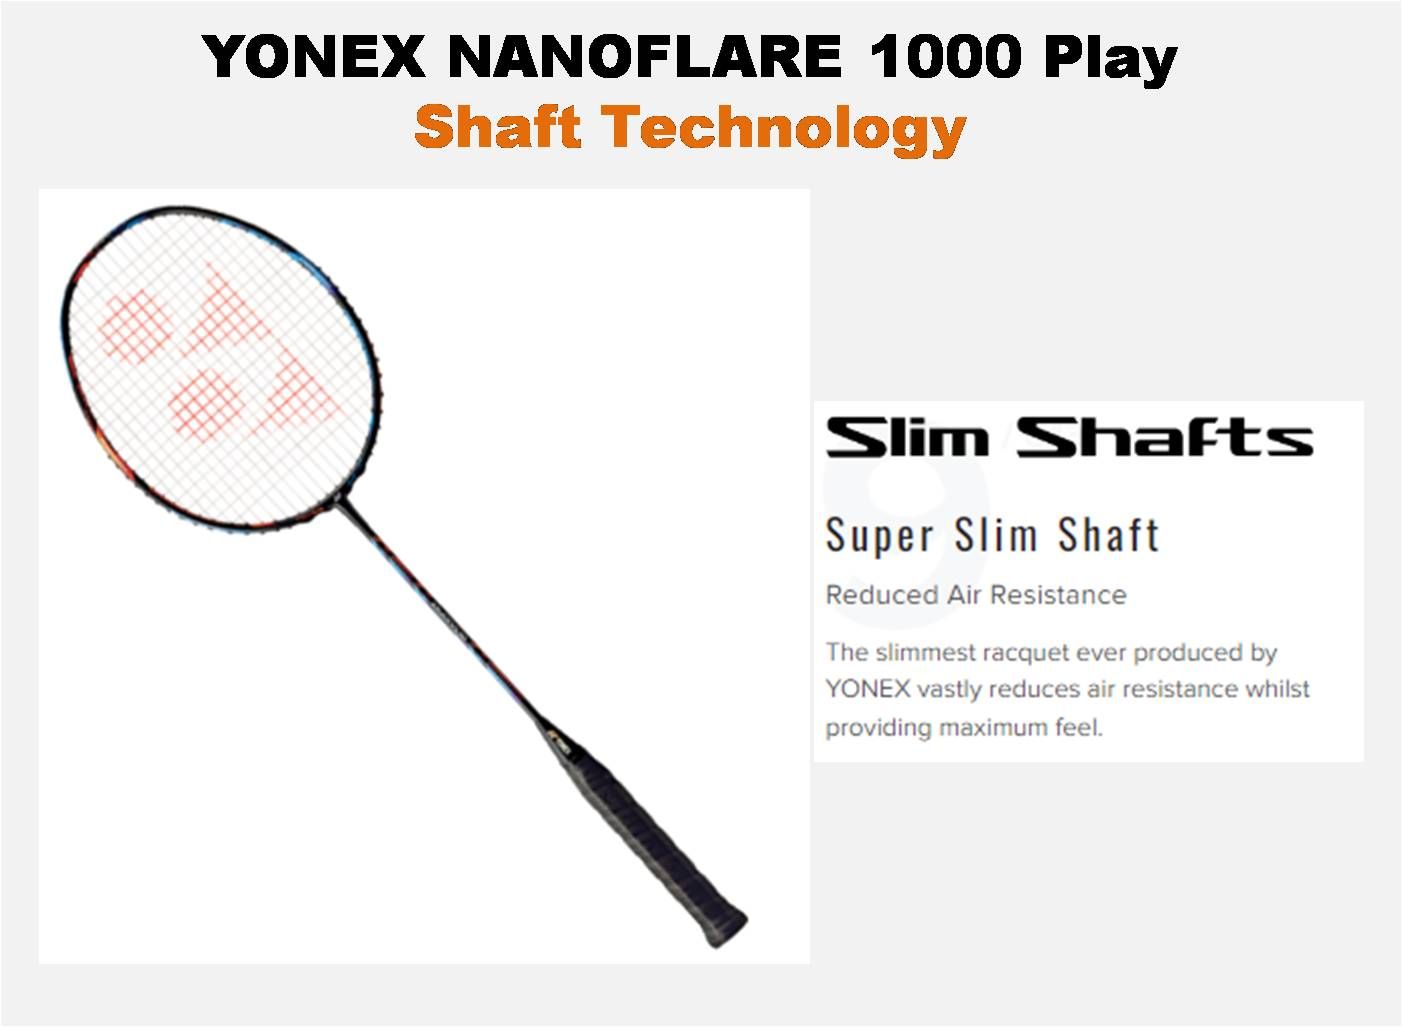 Yonex_Nanoflare_1000_Play_shaft_technology